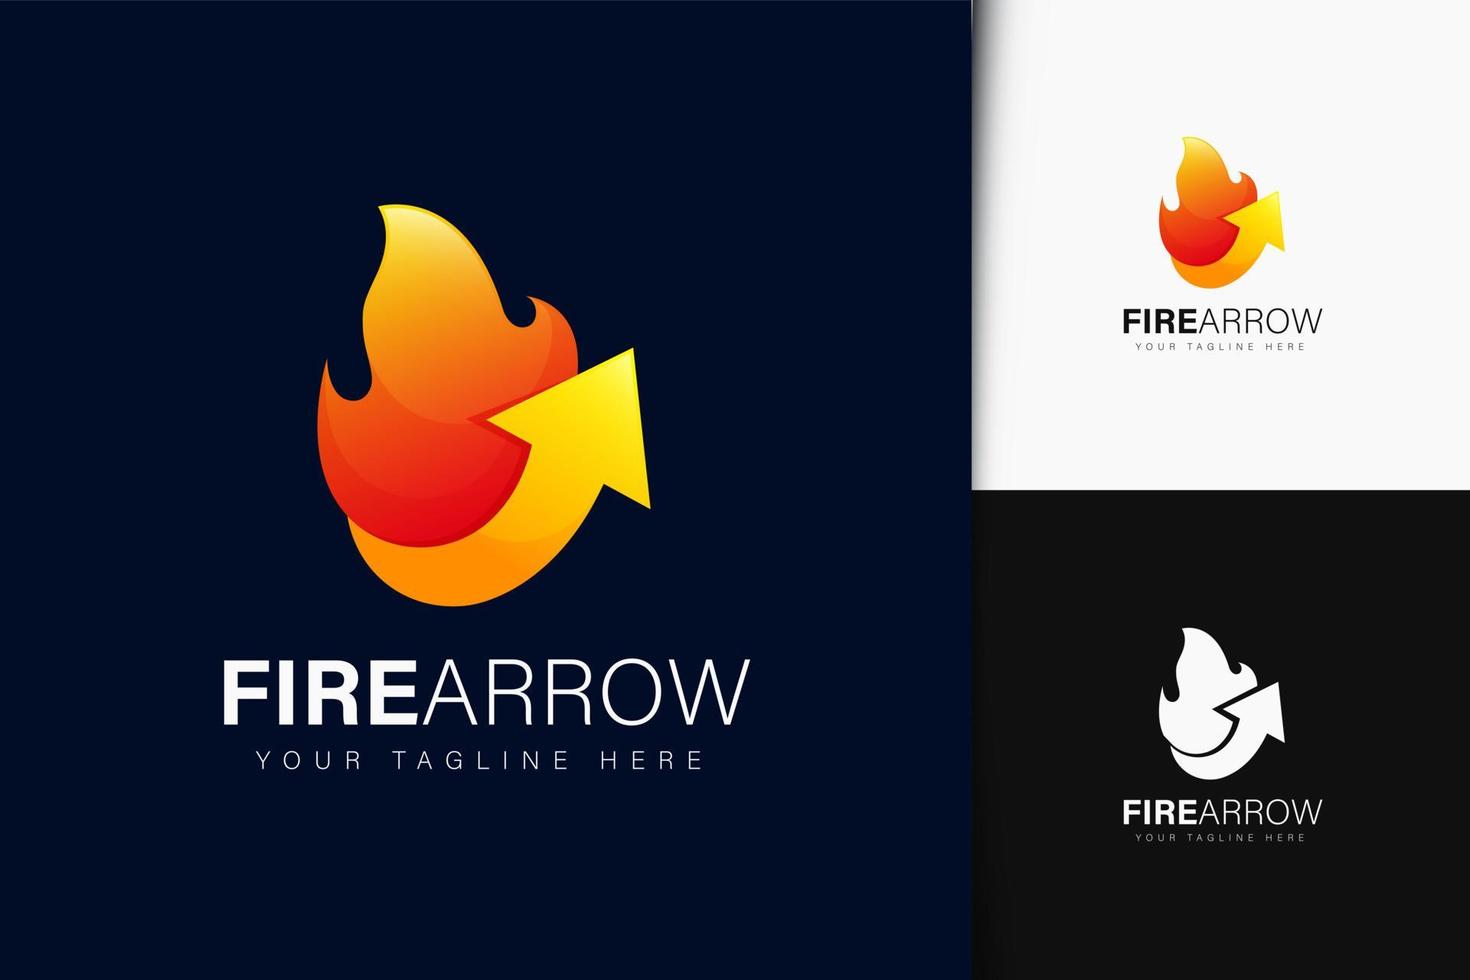 Fire arrow logo design with gradient vector